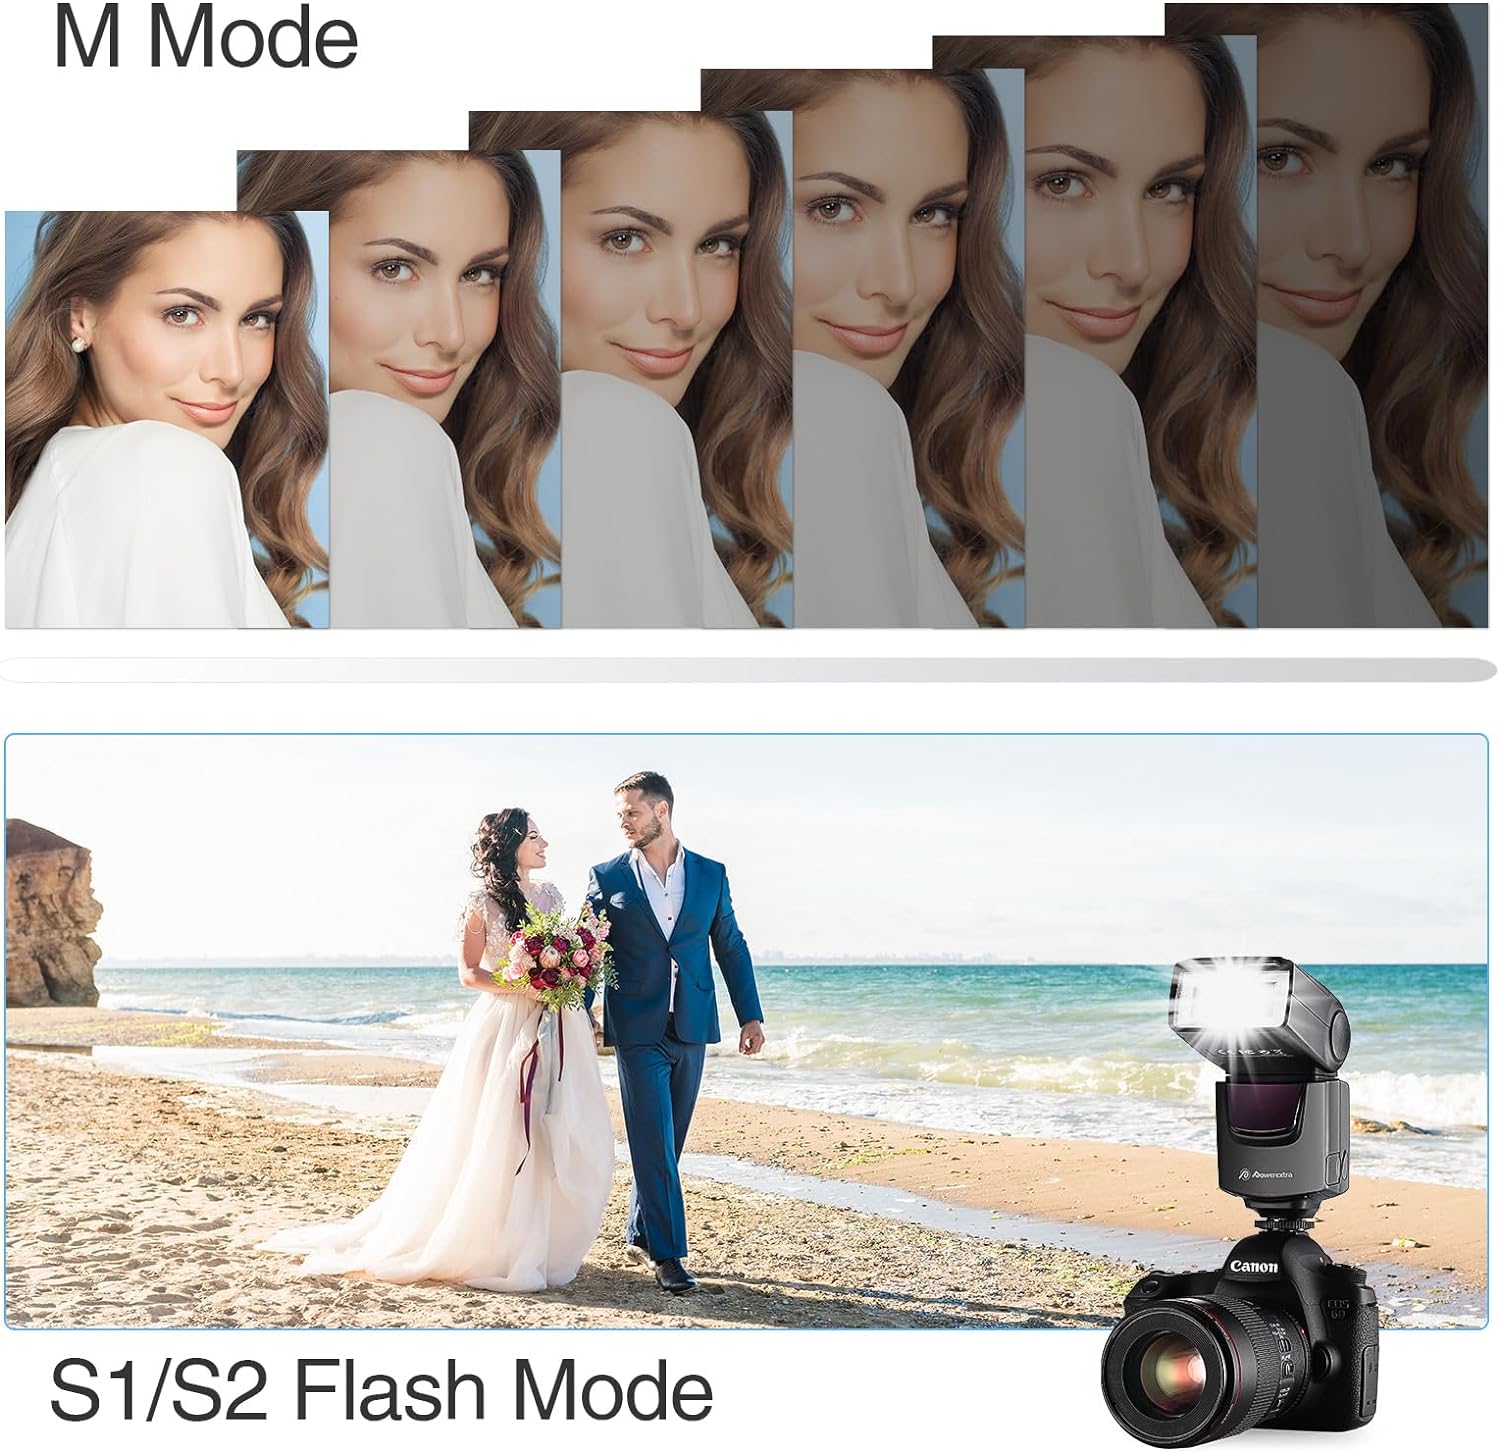 Powerextra Professional DF-400 Speedlite Camera Flash - $30